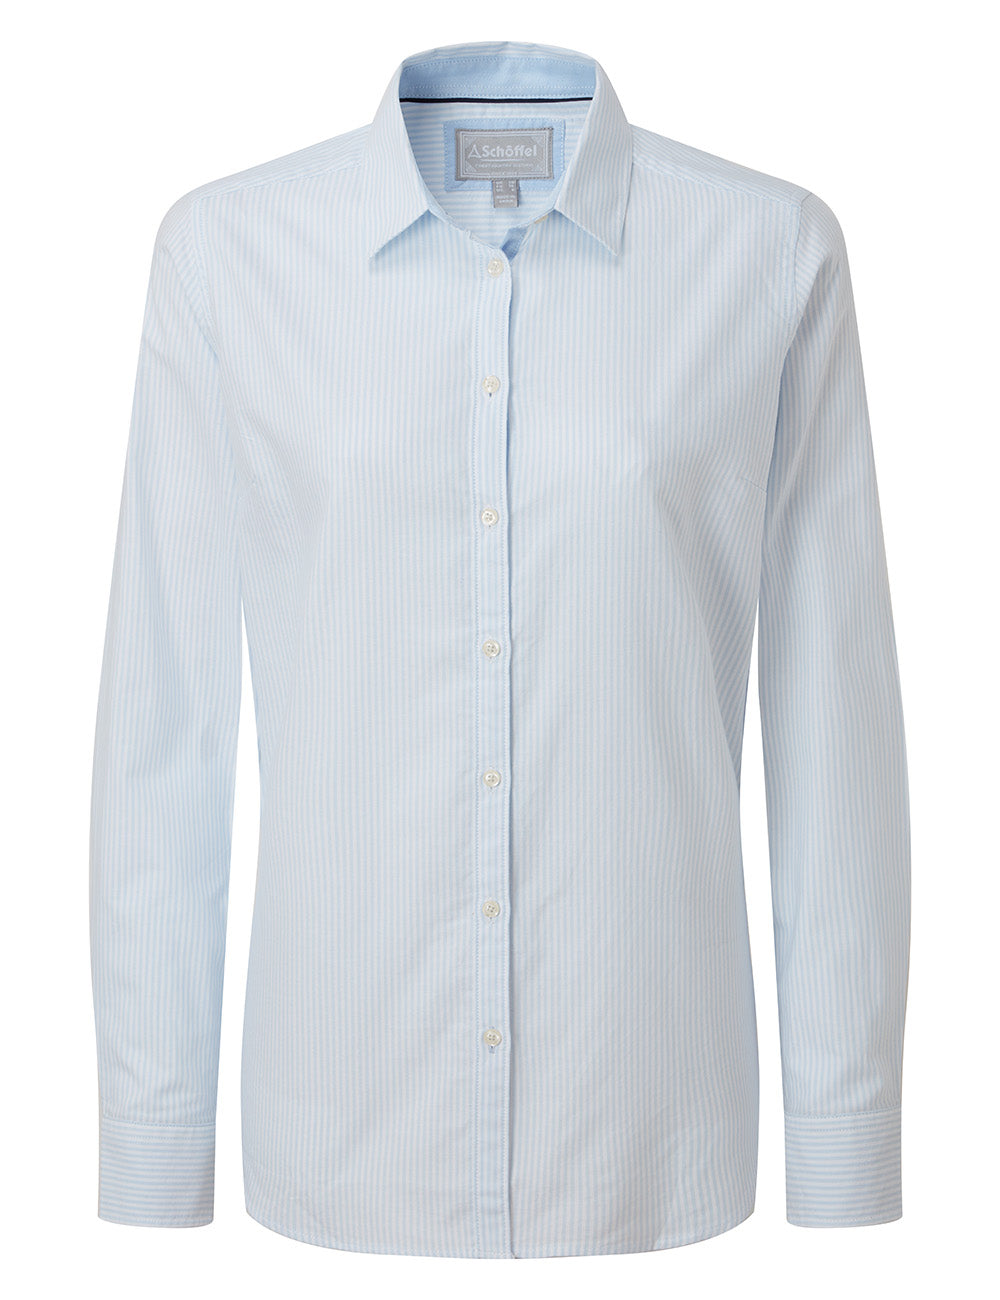 Schoffel Cley Soft Oxford Shirt - Pale Blue Stripe